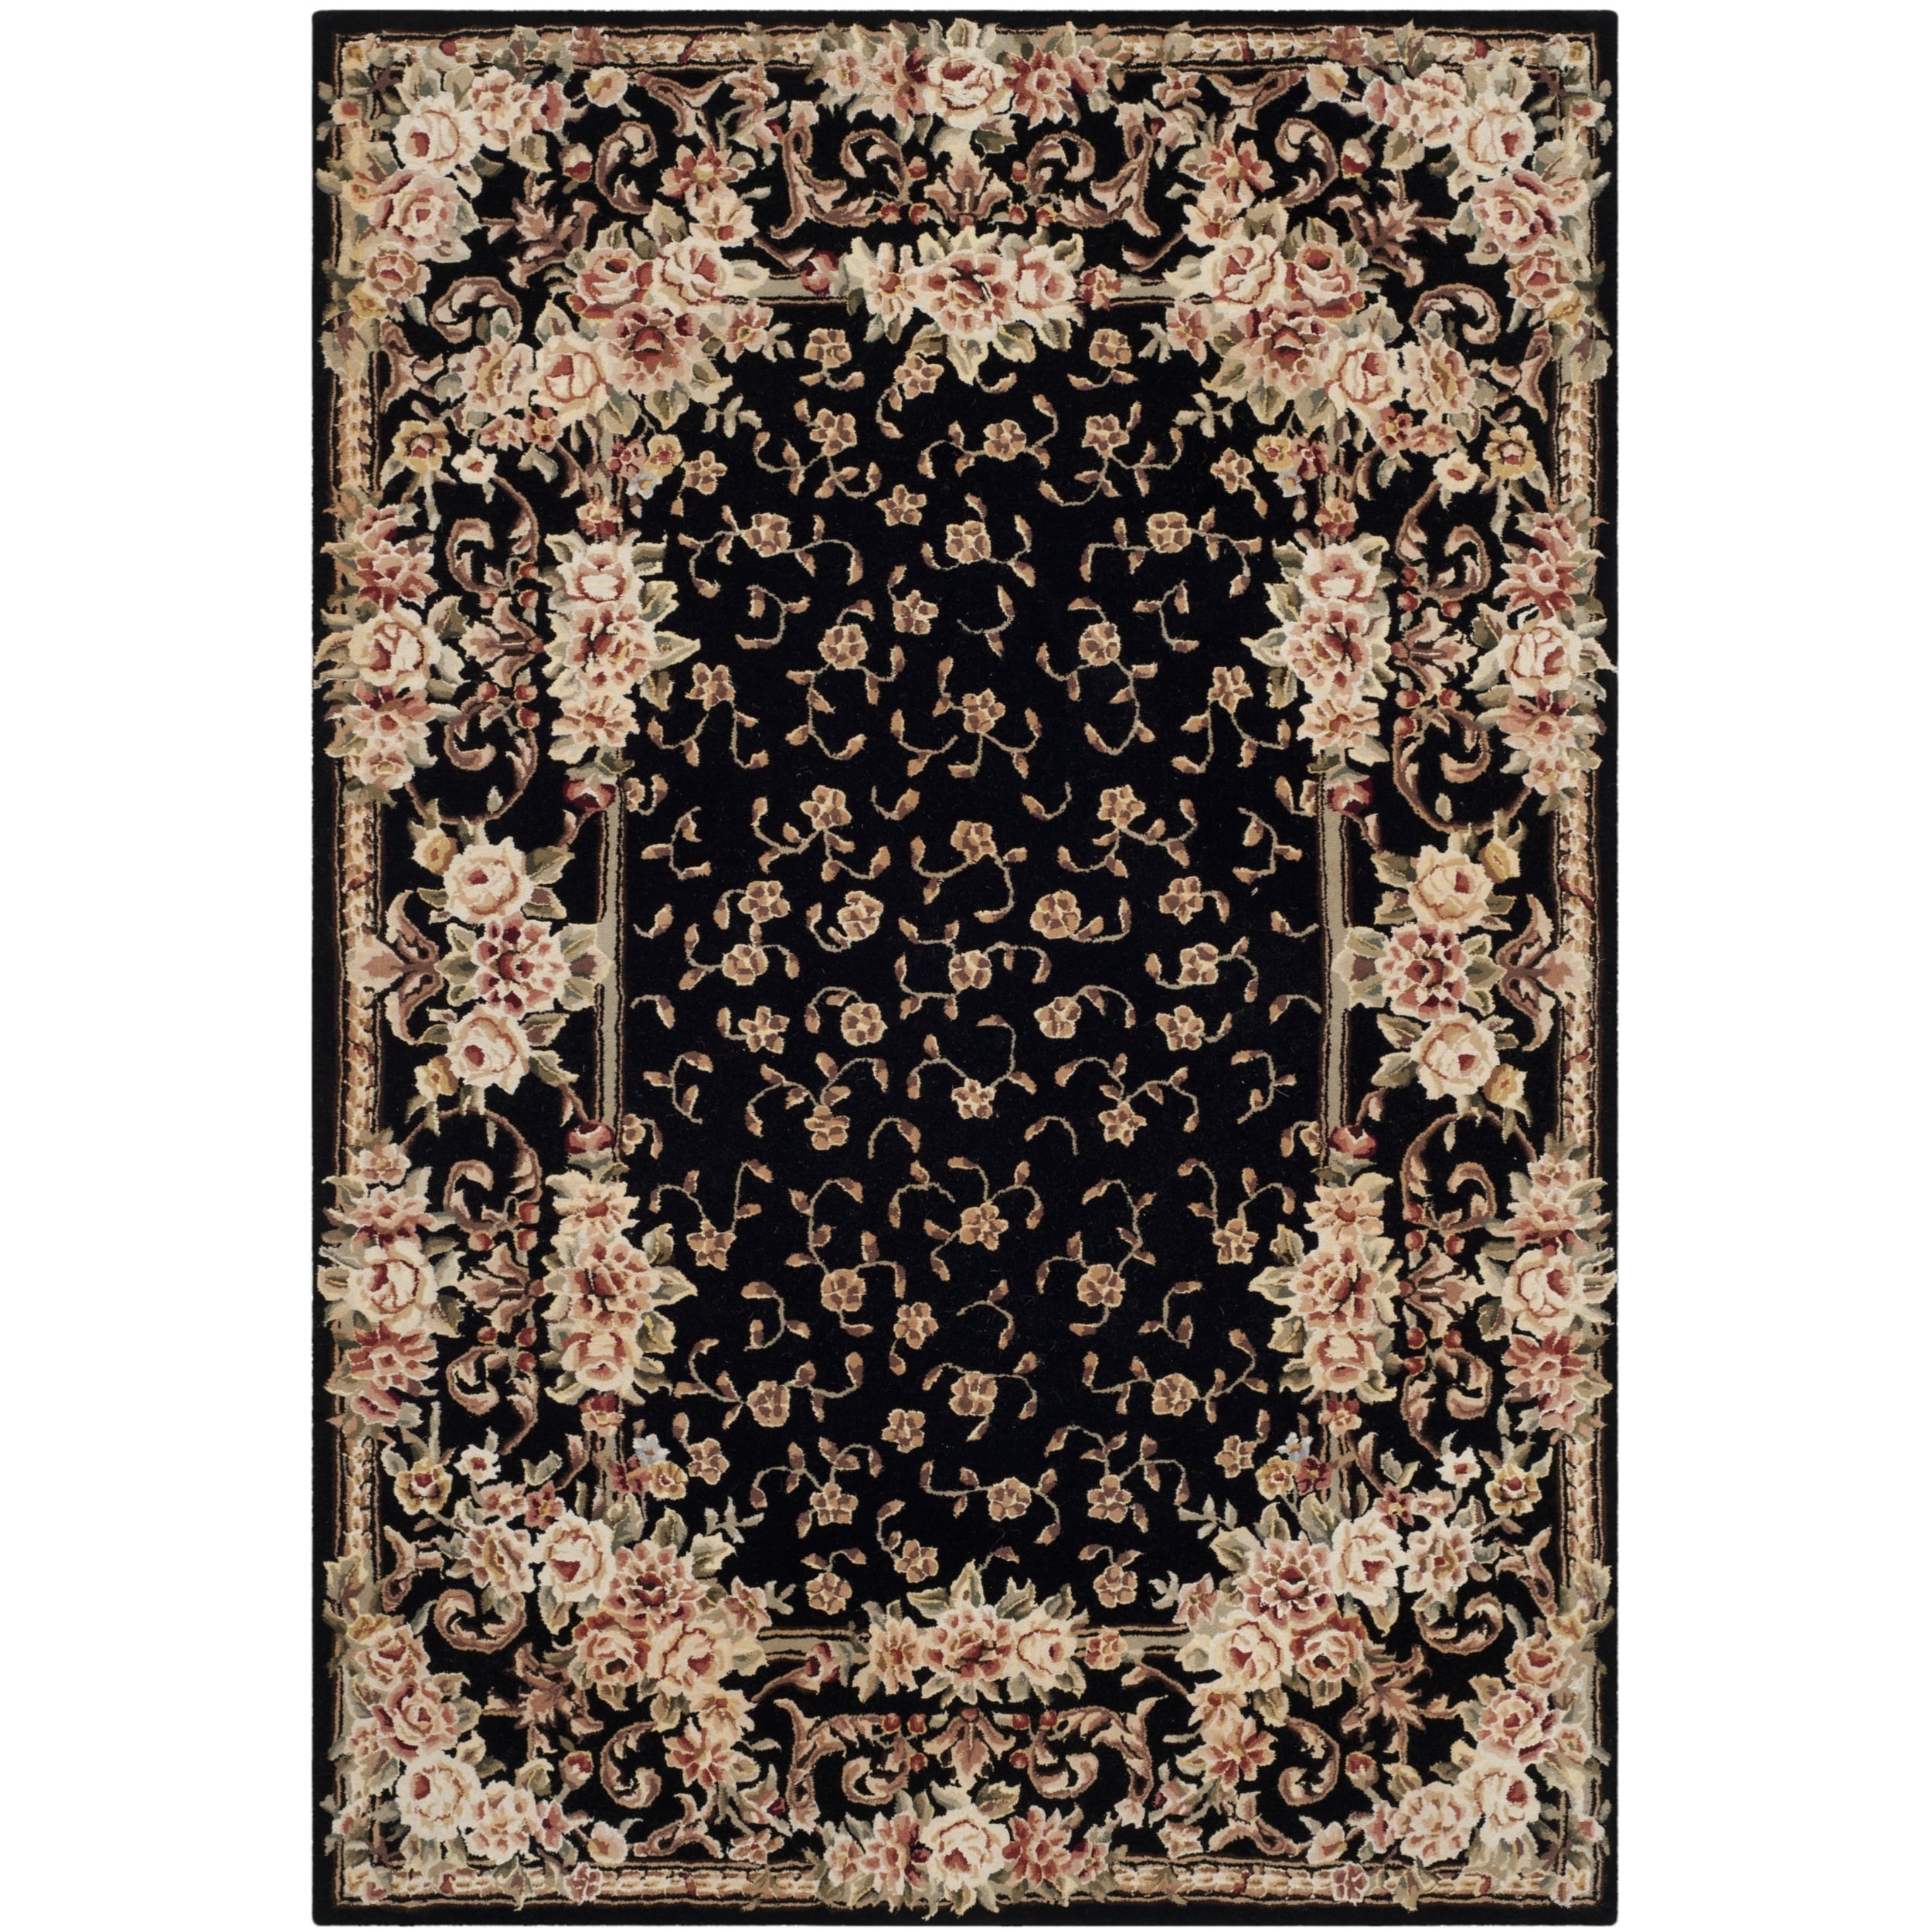 Safavieh Handmade Persian Court Multicolored Wool/ Silk Rug (4 X 6)